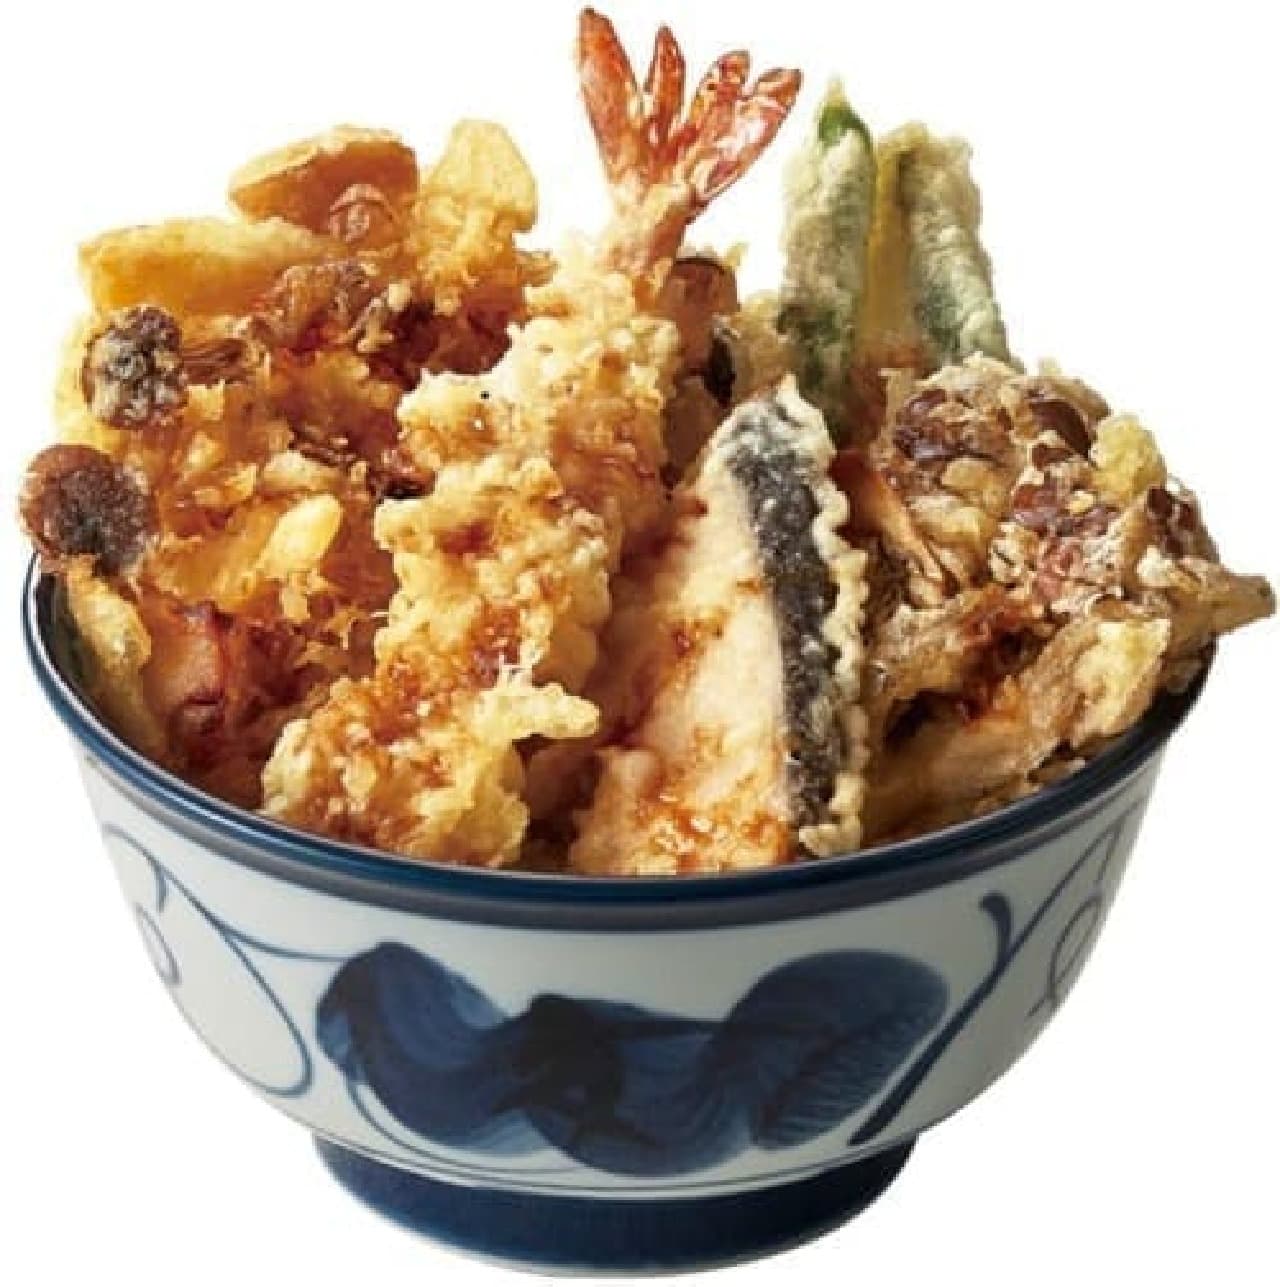 Tenya "Matsutake mushrooms and shrimp, autumn salmon autumn bowl"